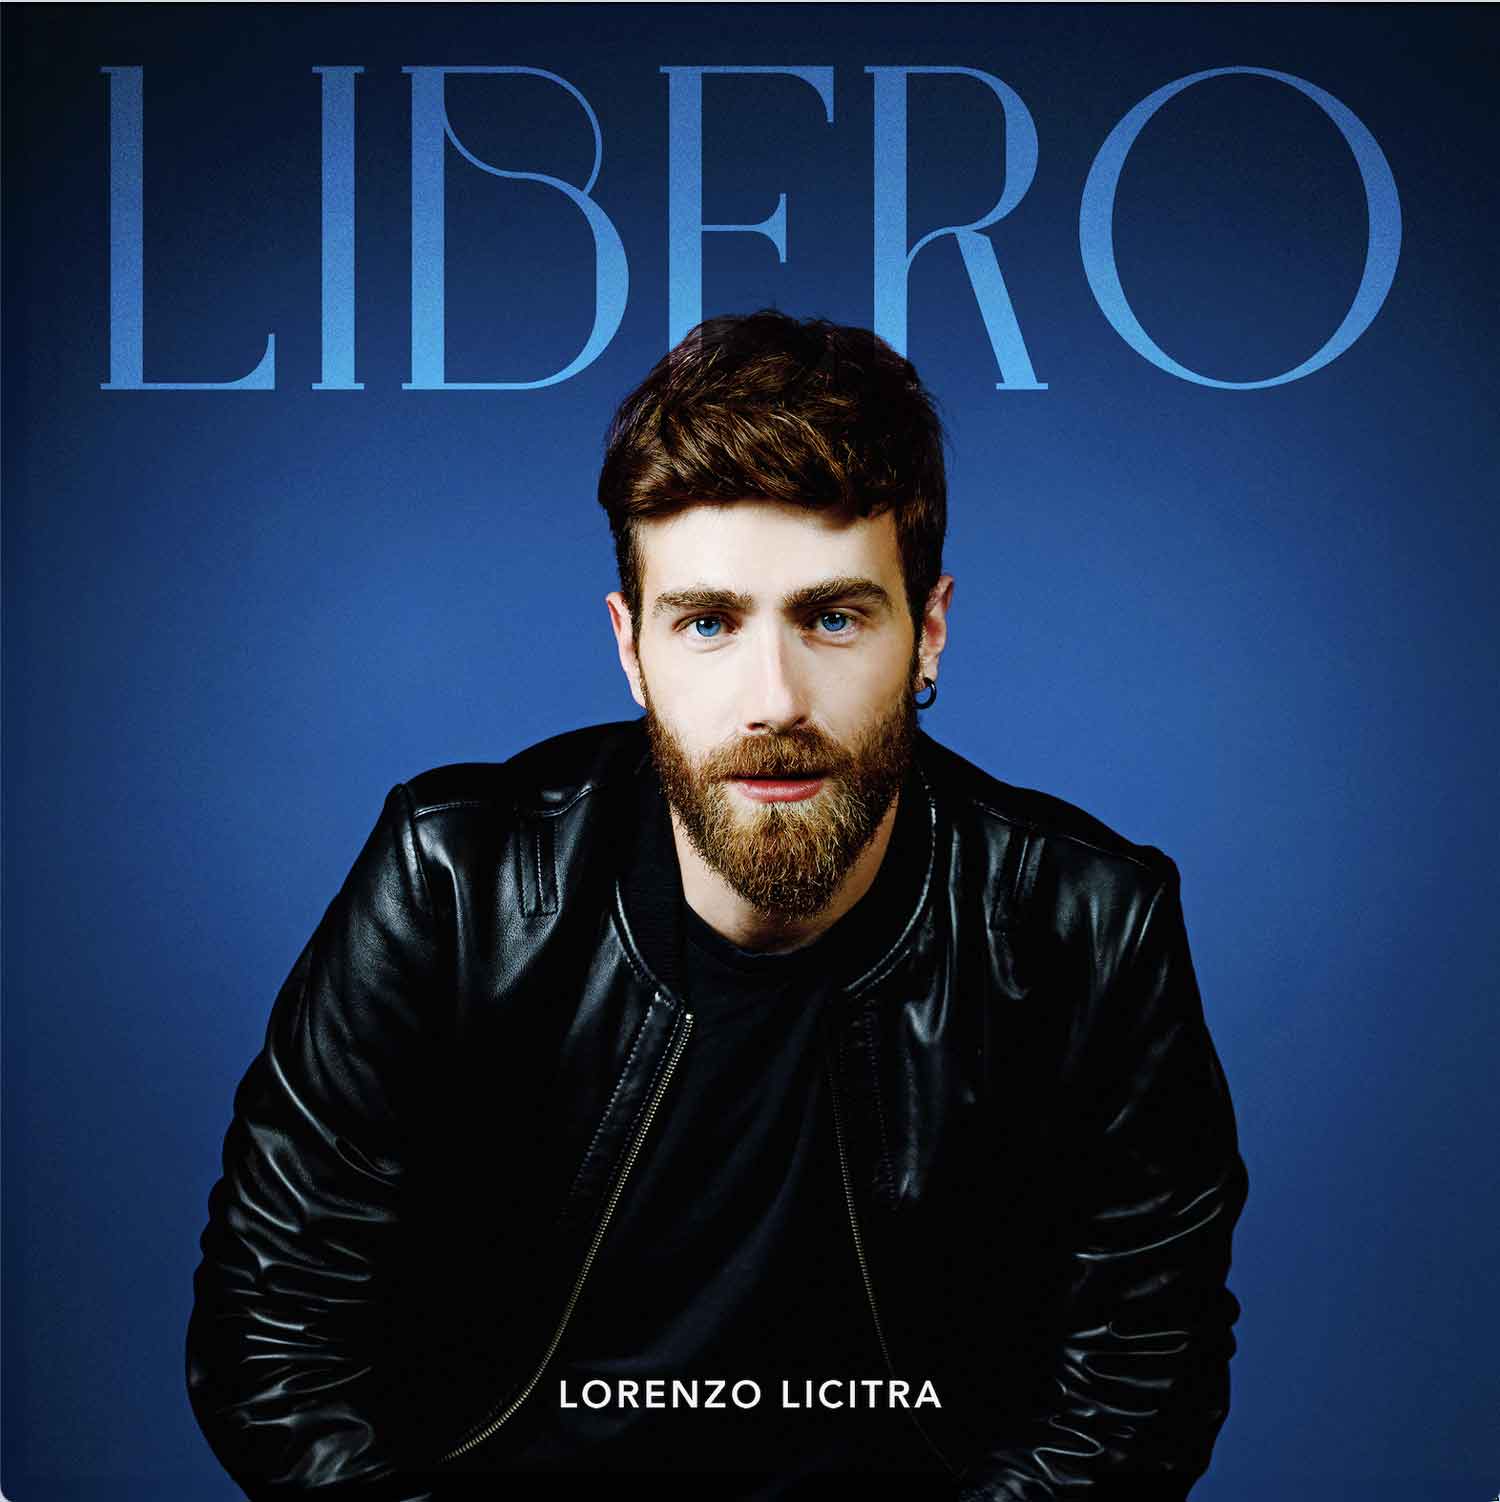 Lorenzo Licitra